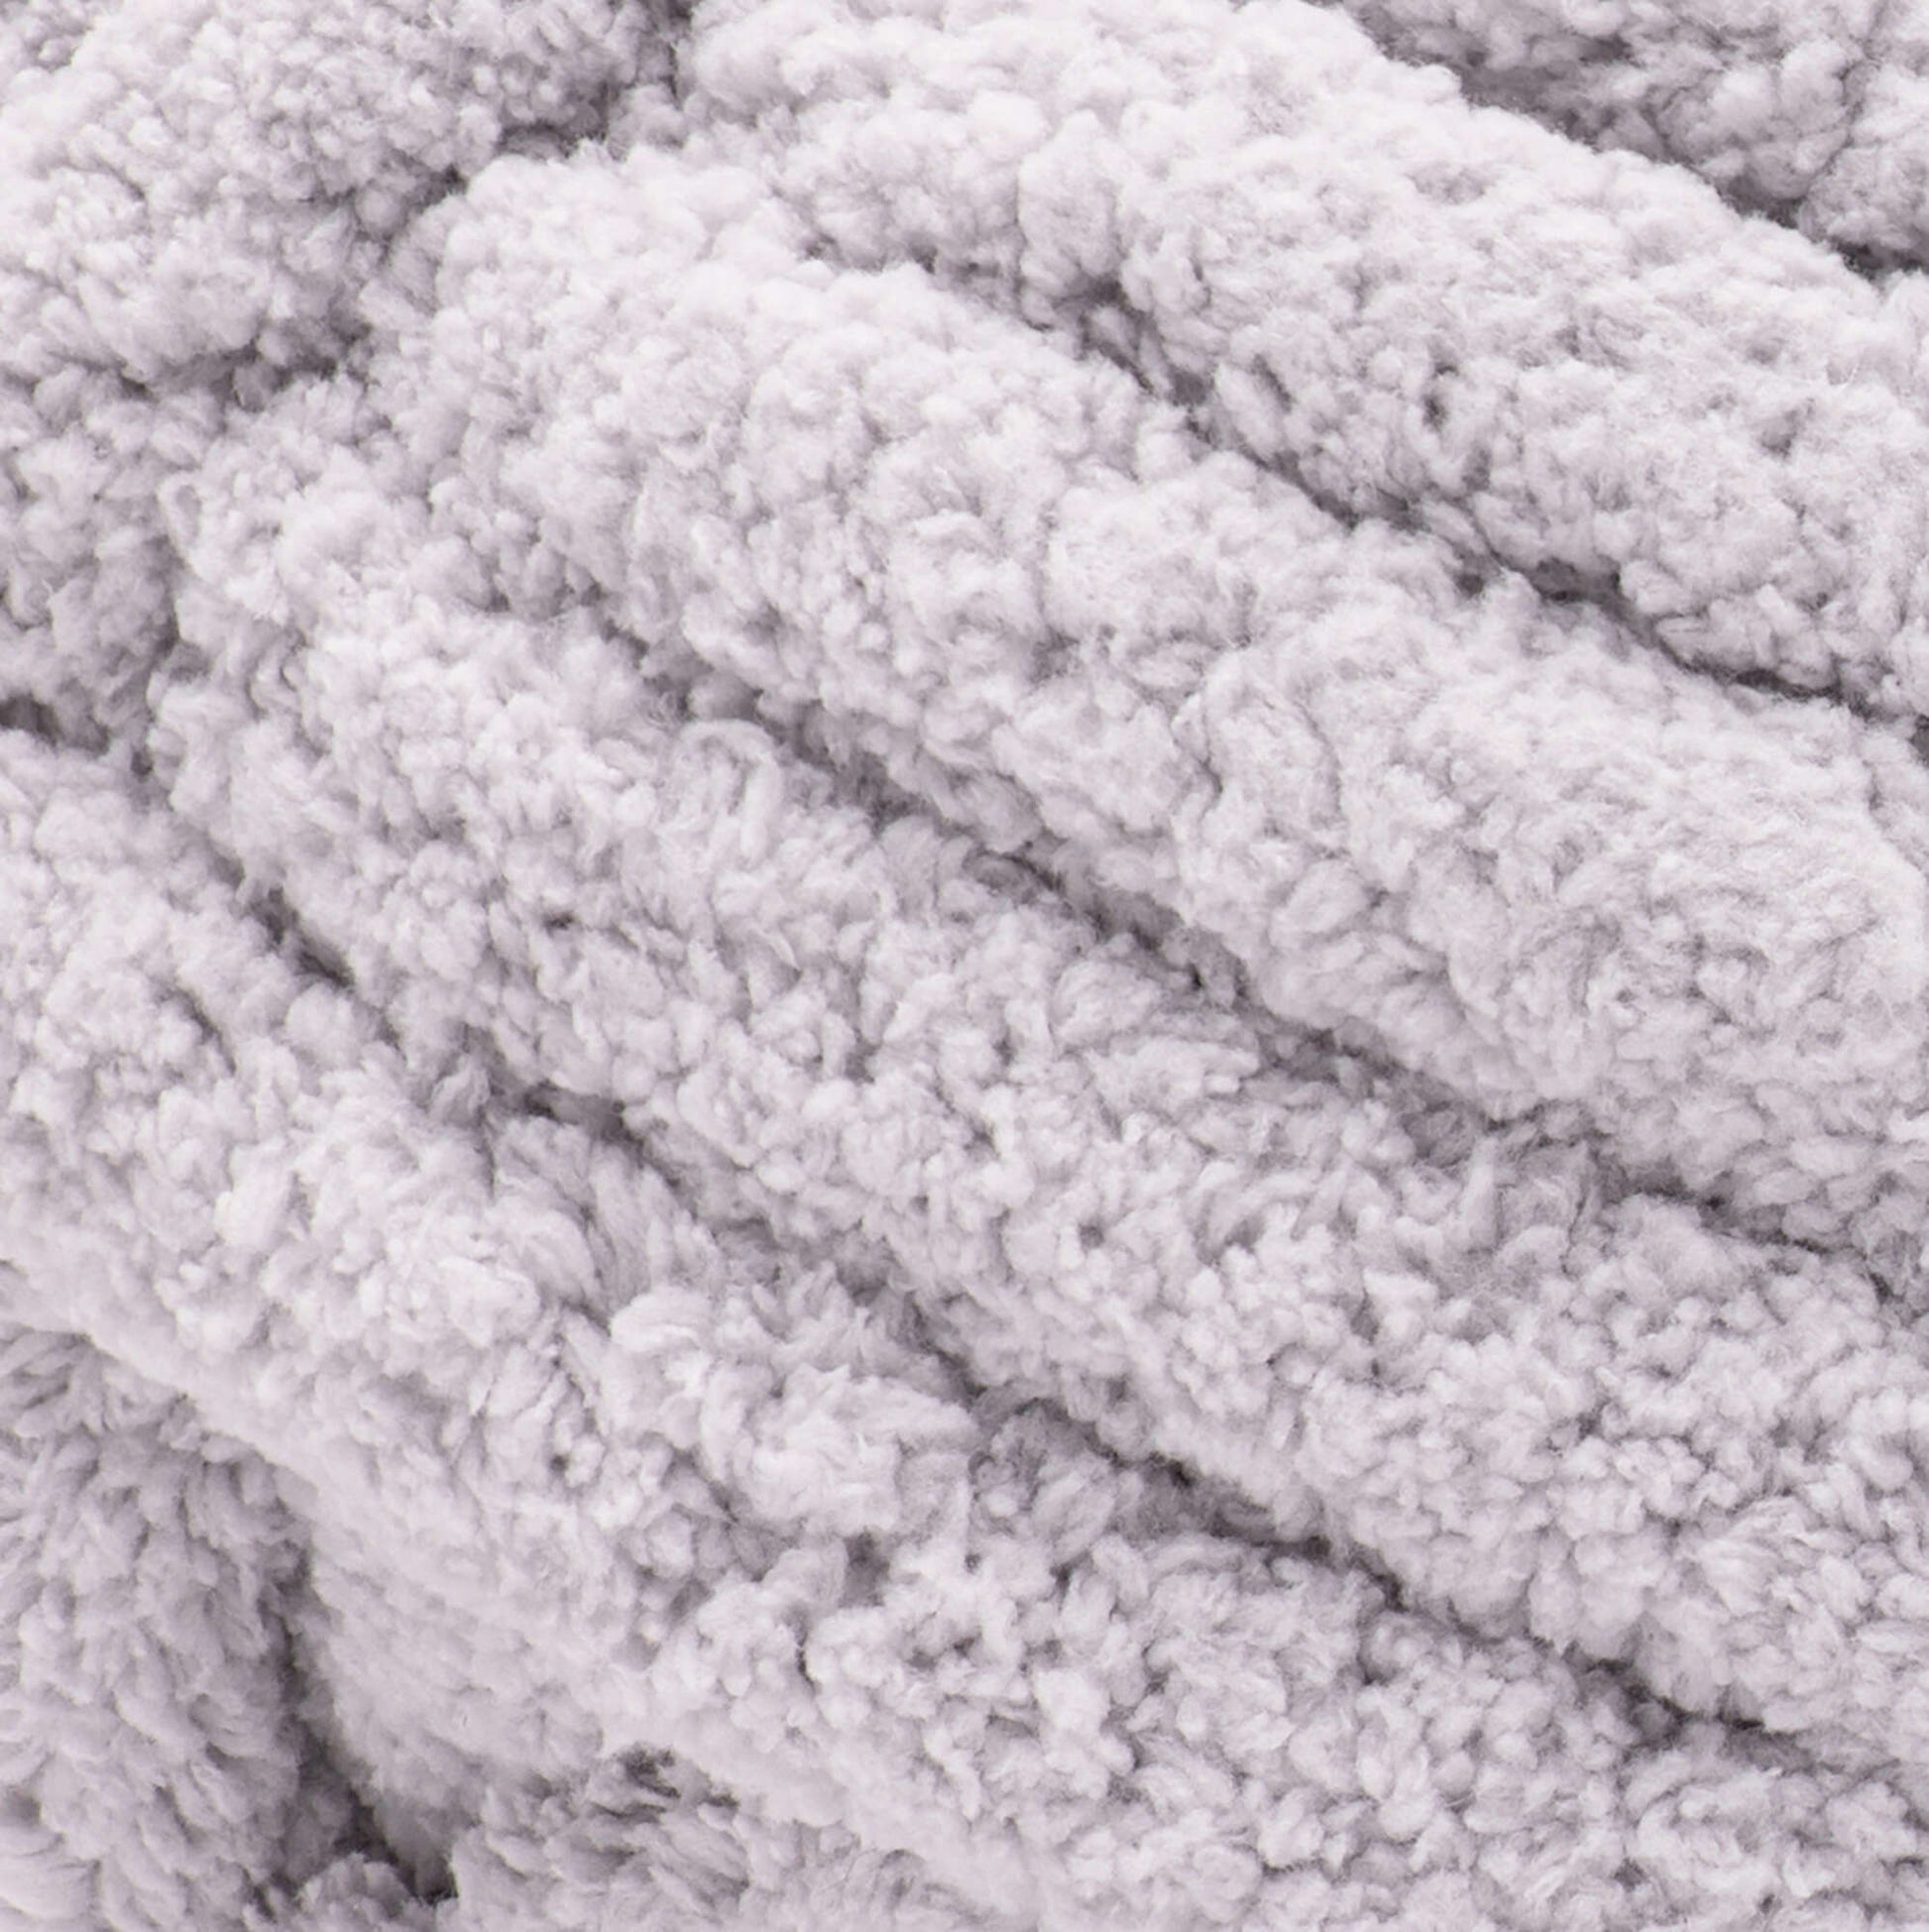 Bernat Blanket Big Ball Yarn 300g - CRAFT2U